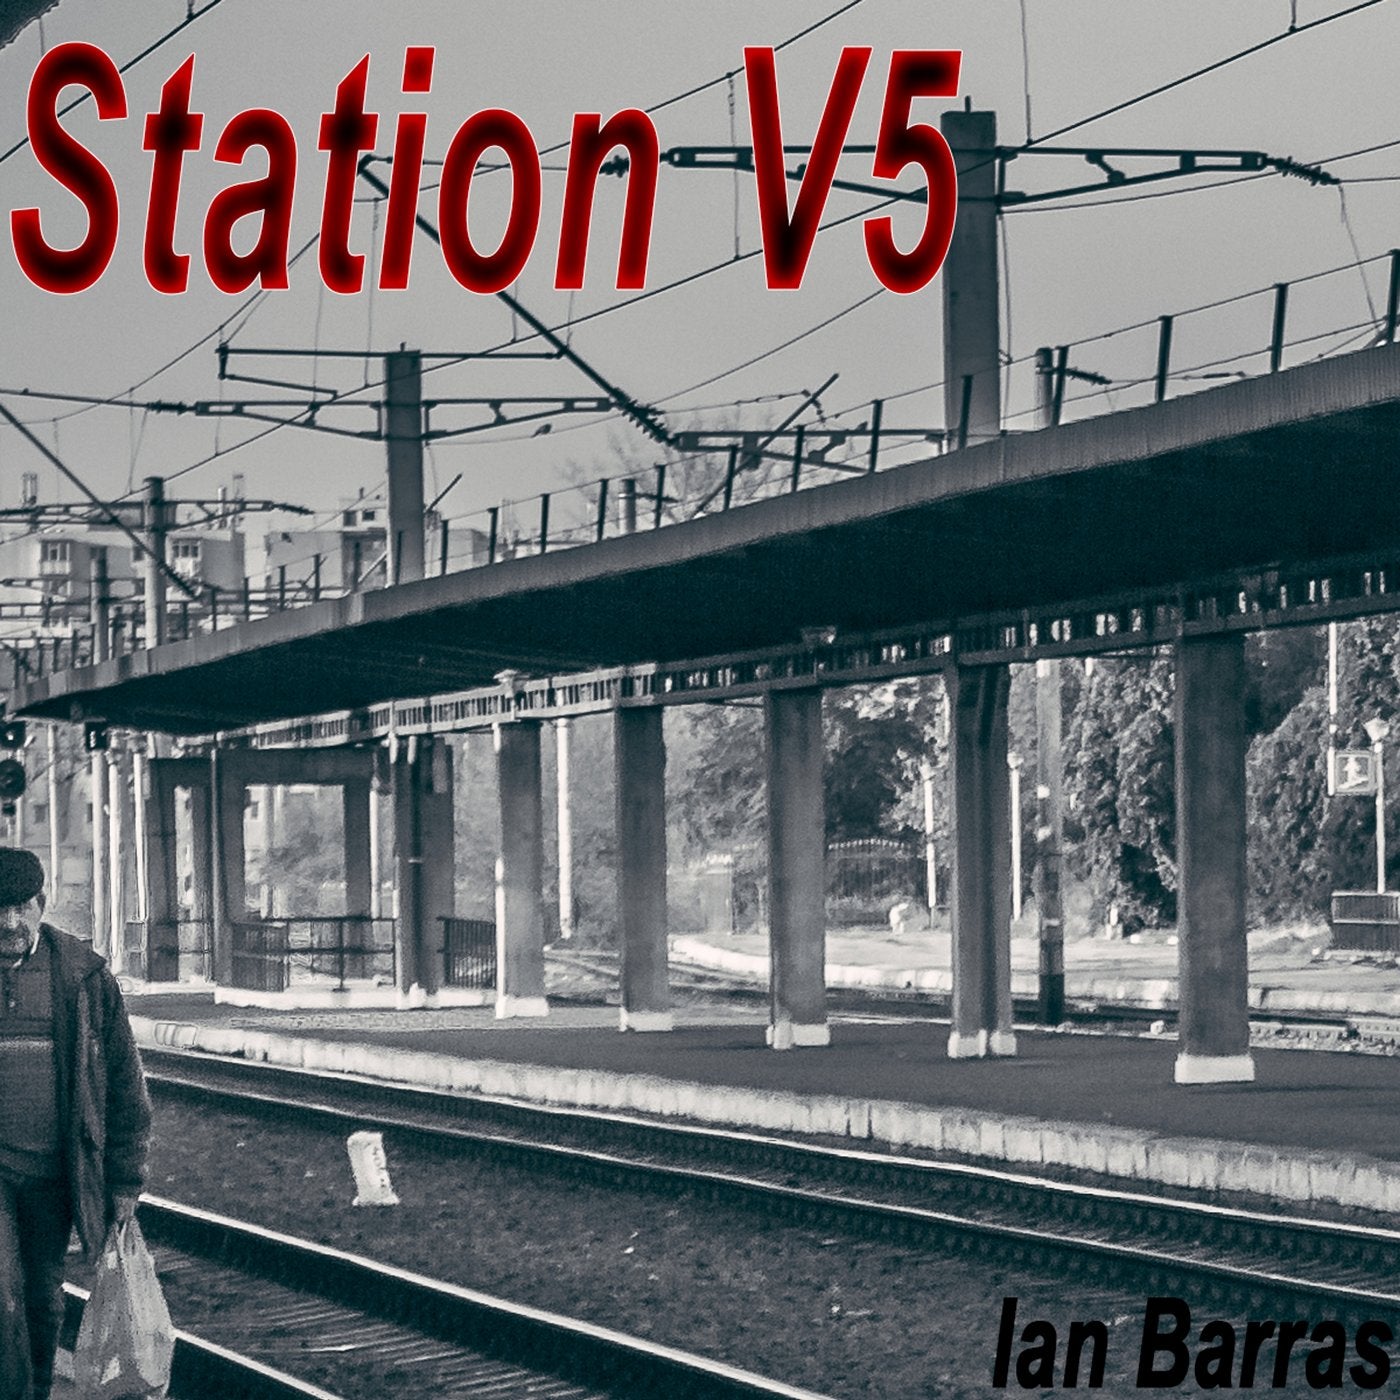 Station V5